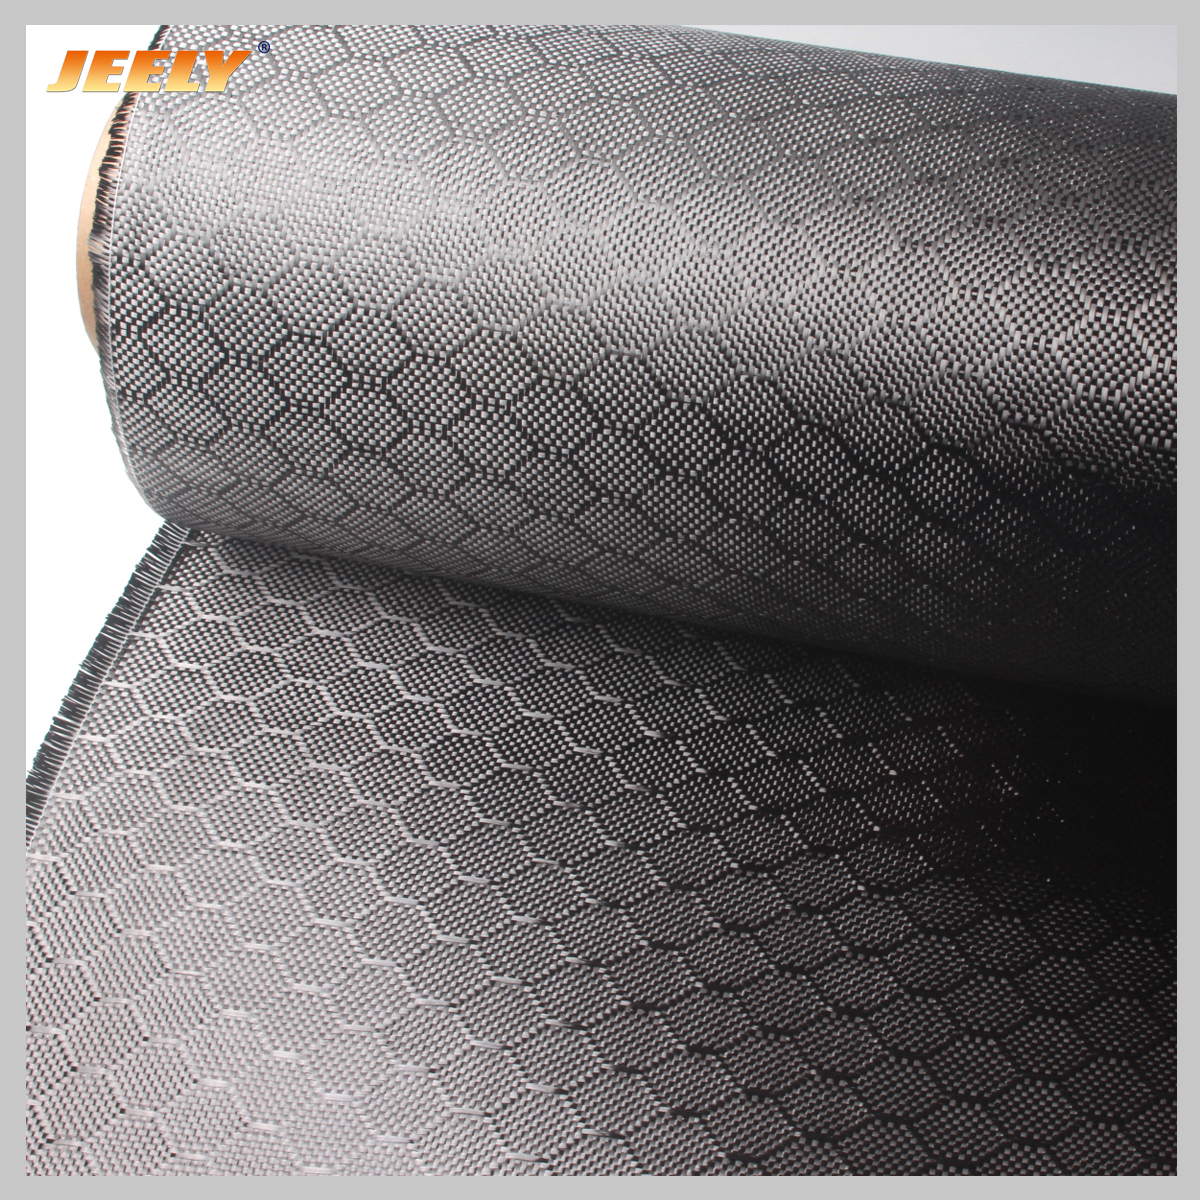 Black Color 3K 240gsm 0.30mm Hexagonal Honeycomb Carbon Fiber Fabric